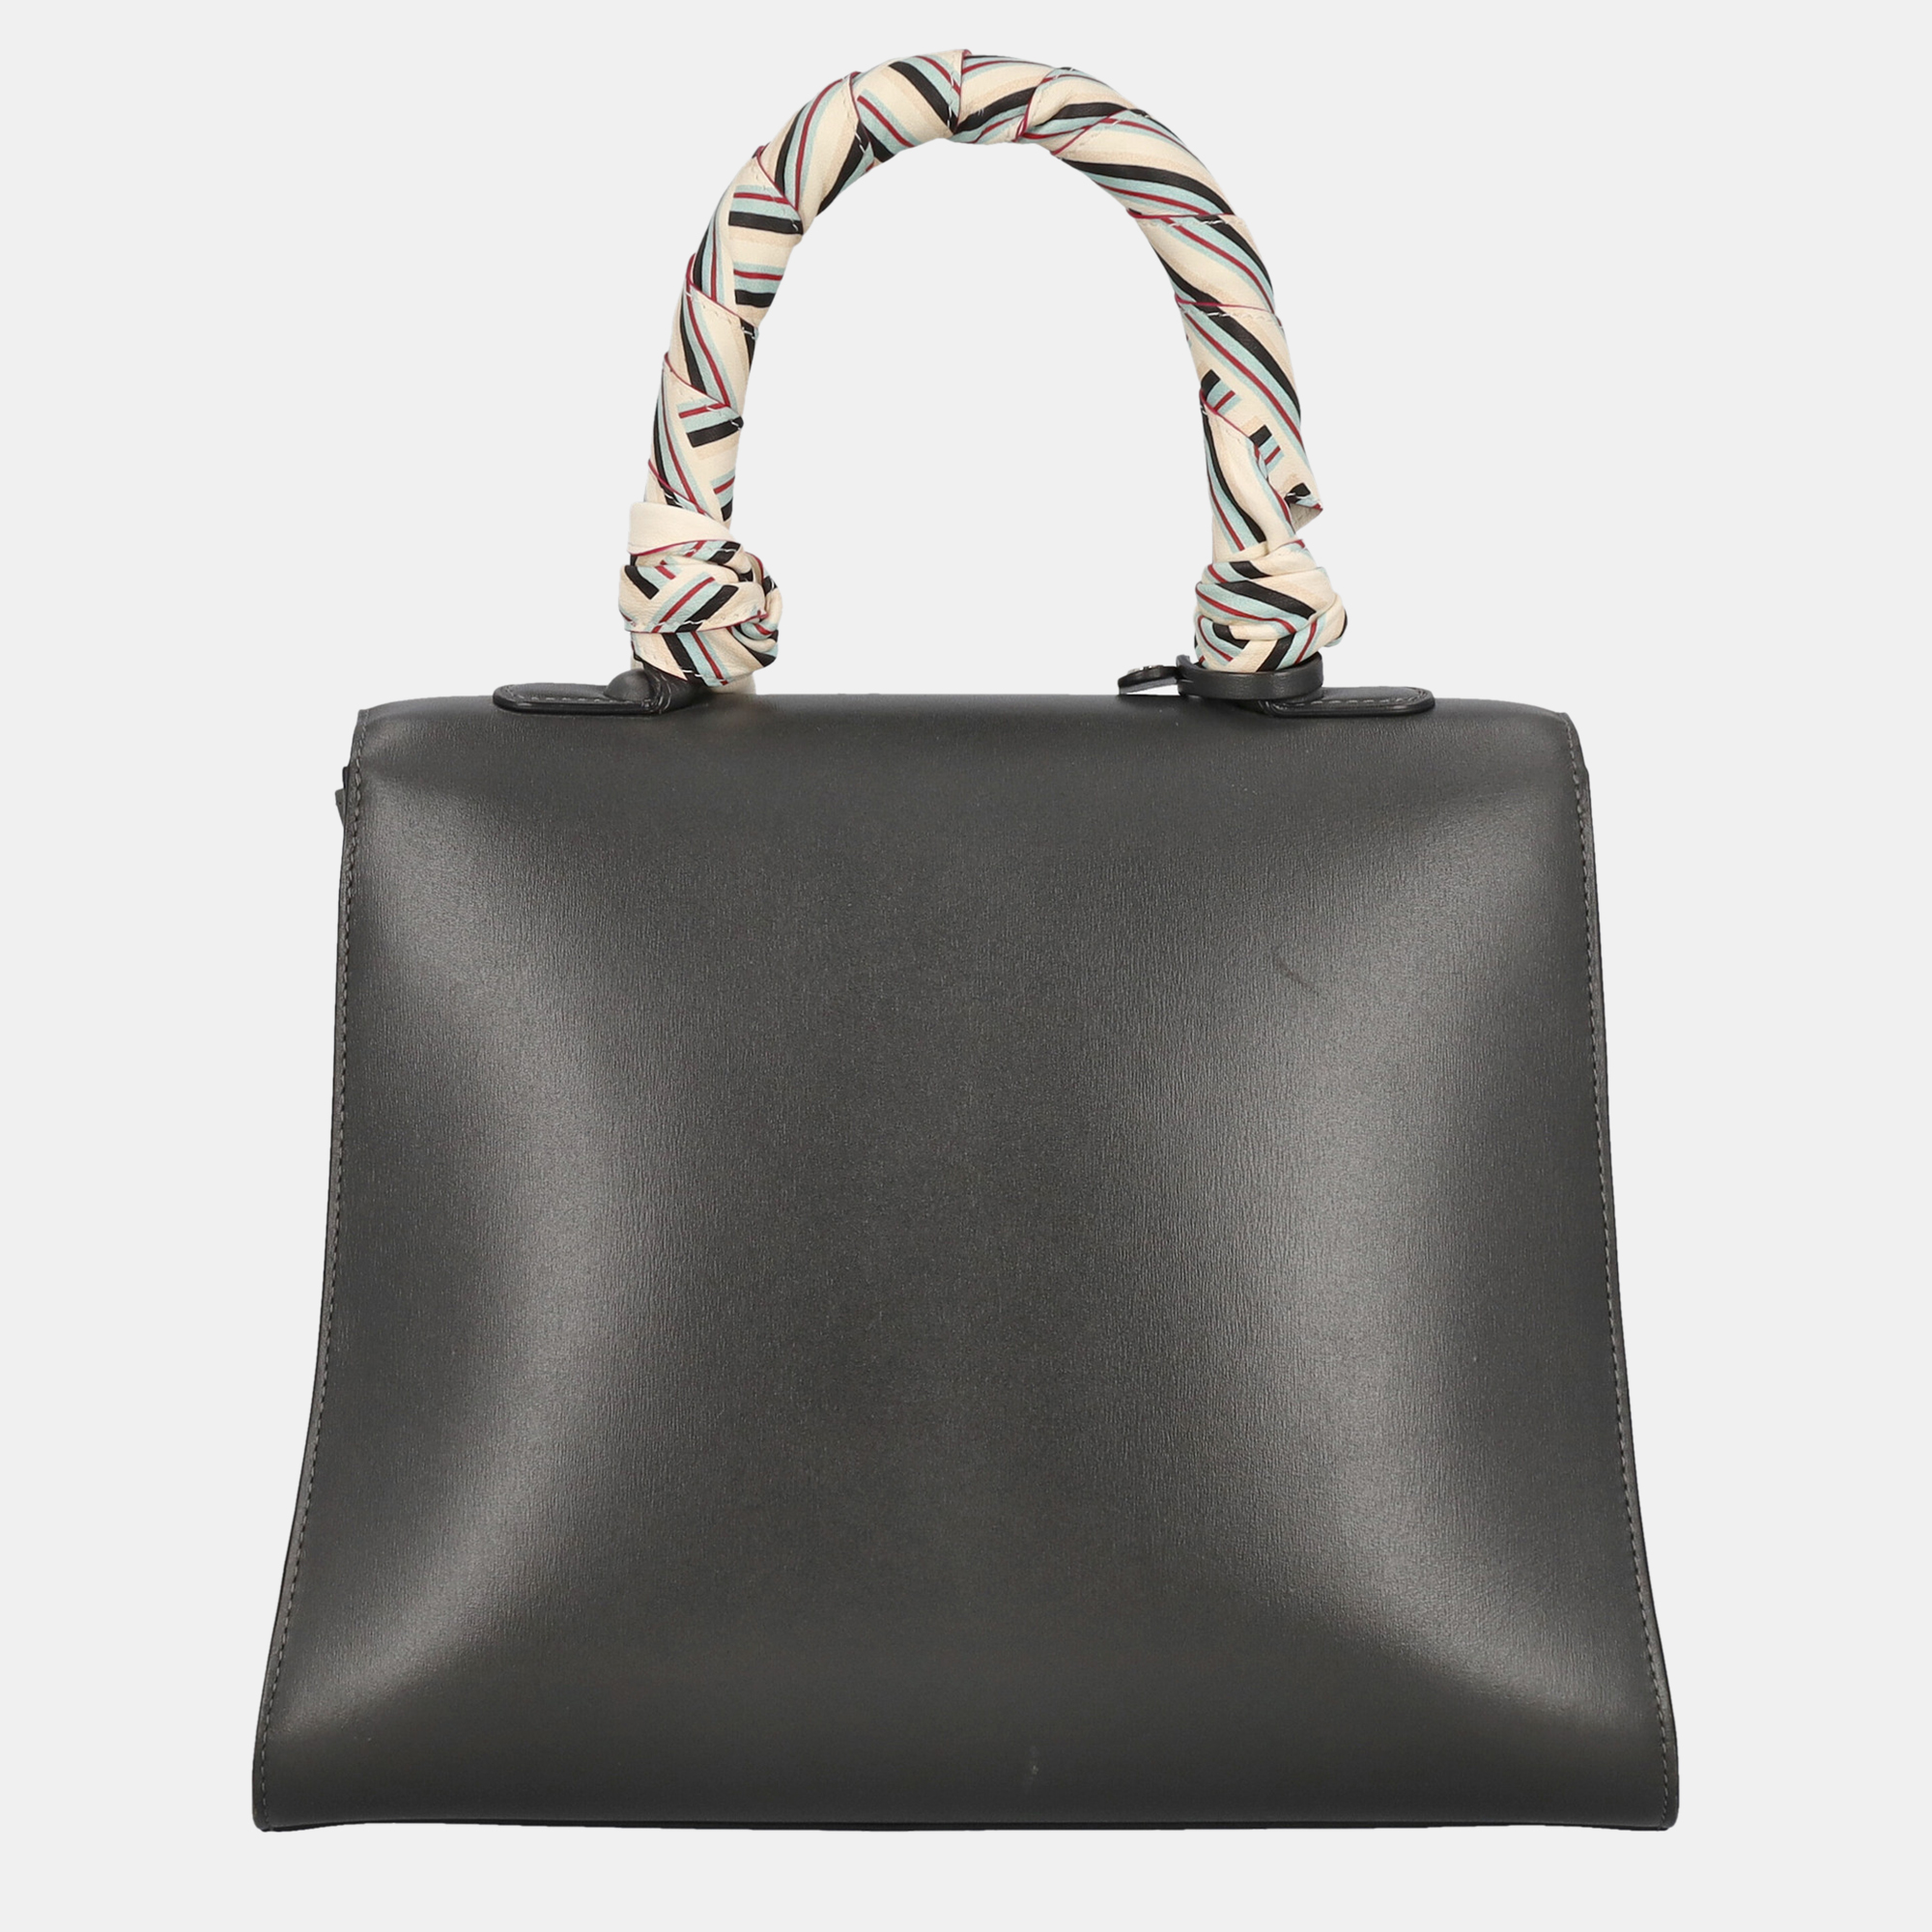 Delvaux Brillant -  Women's Leather Handbag - Grey - One Size